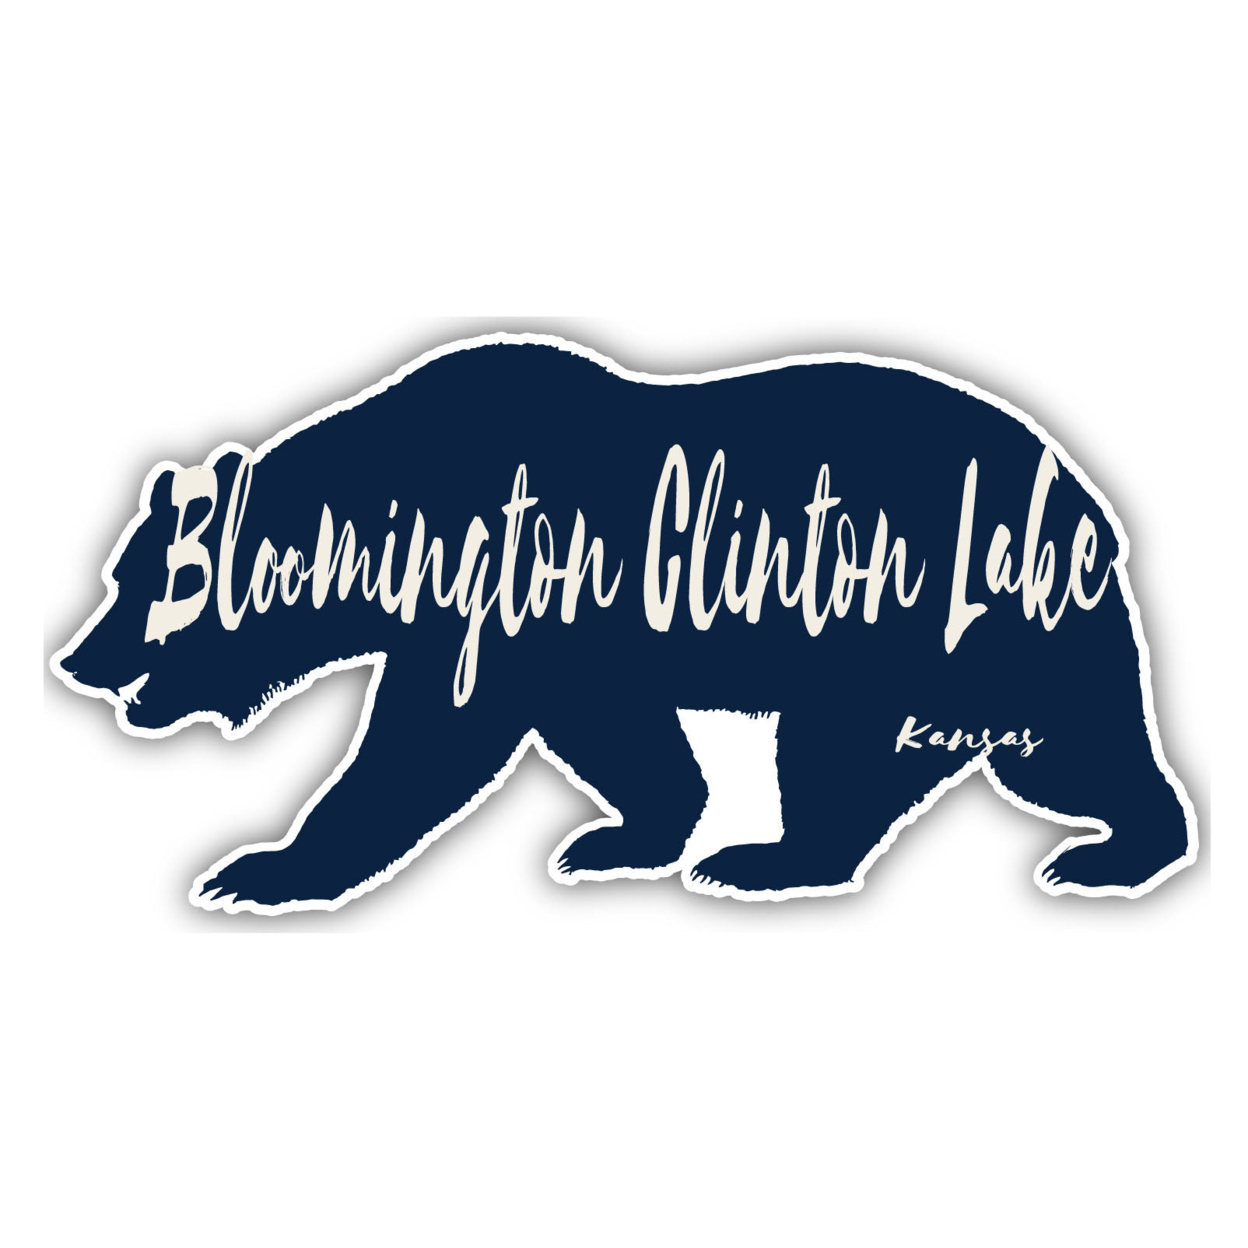 Bloomington Clinton Lake Kansas Souvenir Decorative Stickers (Choose Theme And Size) - Single Unit, 12-Inch, Bear